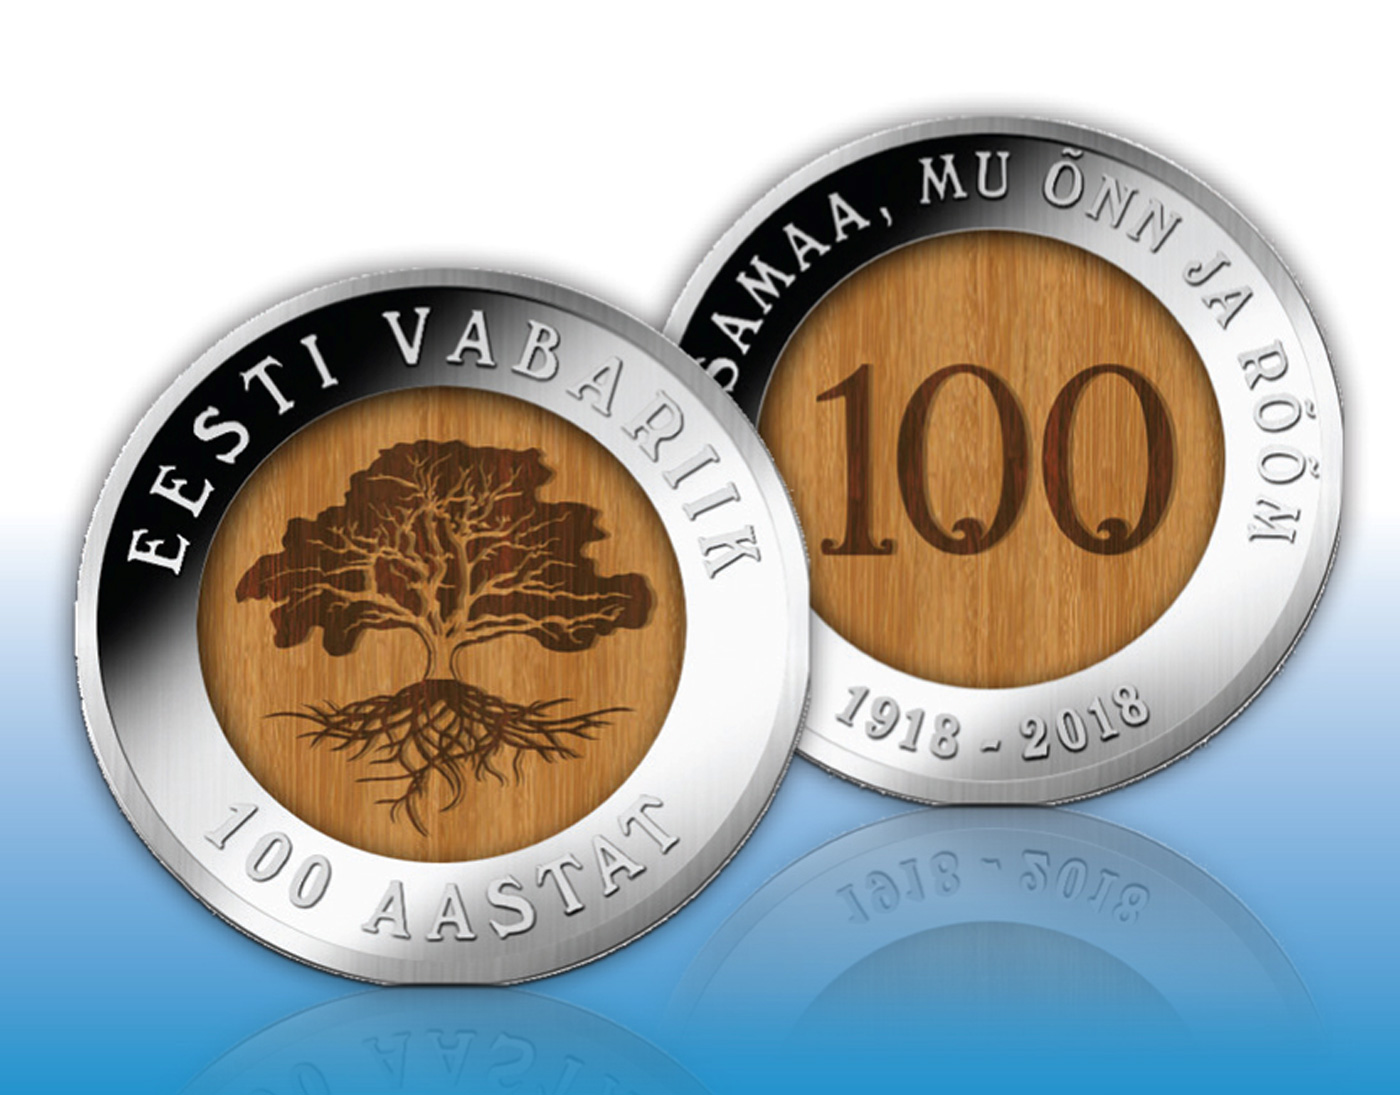 Eesti Mündiäri подарит 25 000 юбилейных медалей